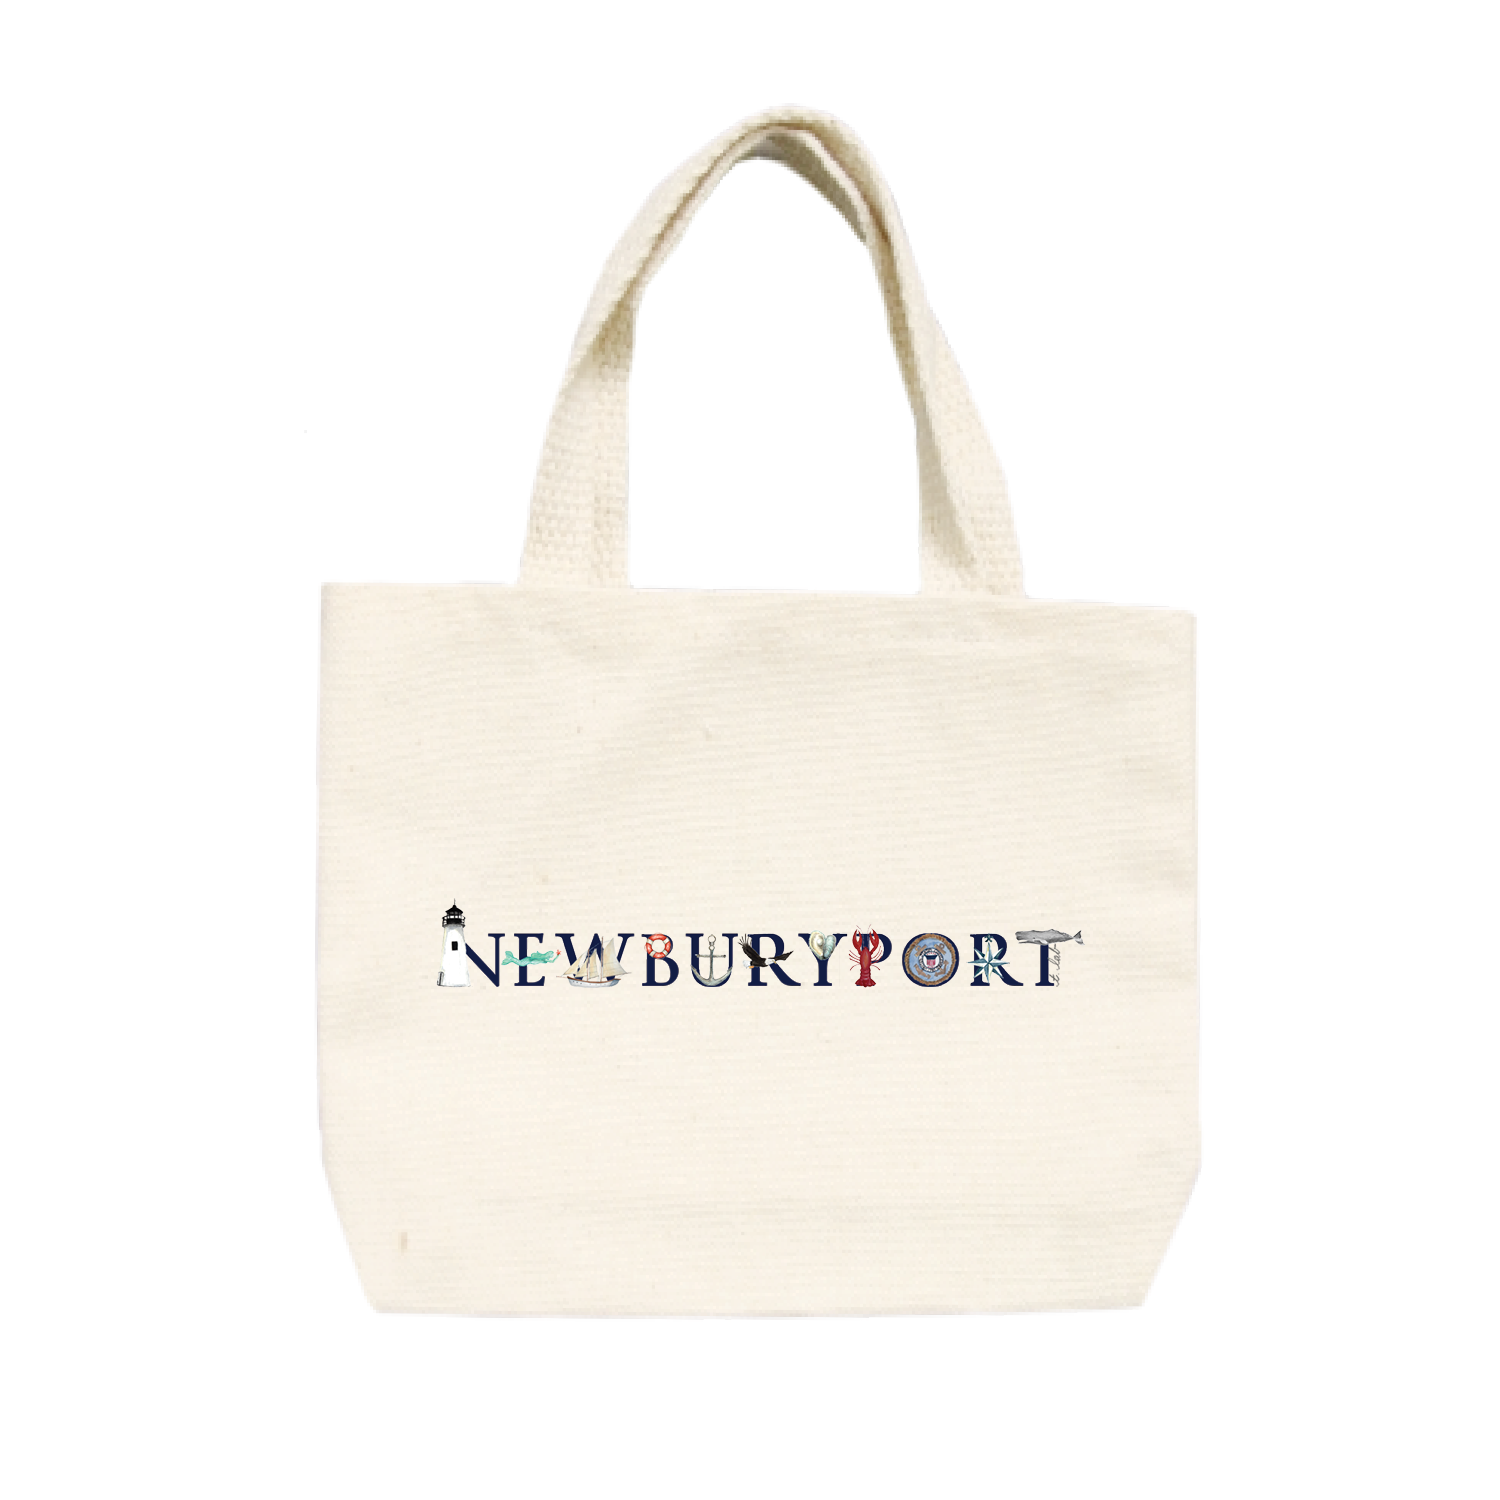 newburyport small tote